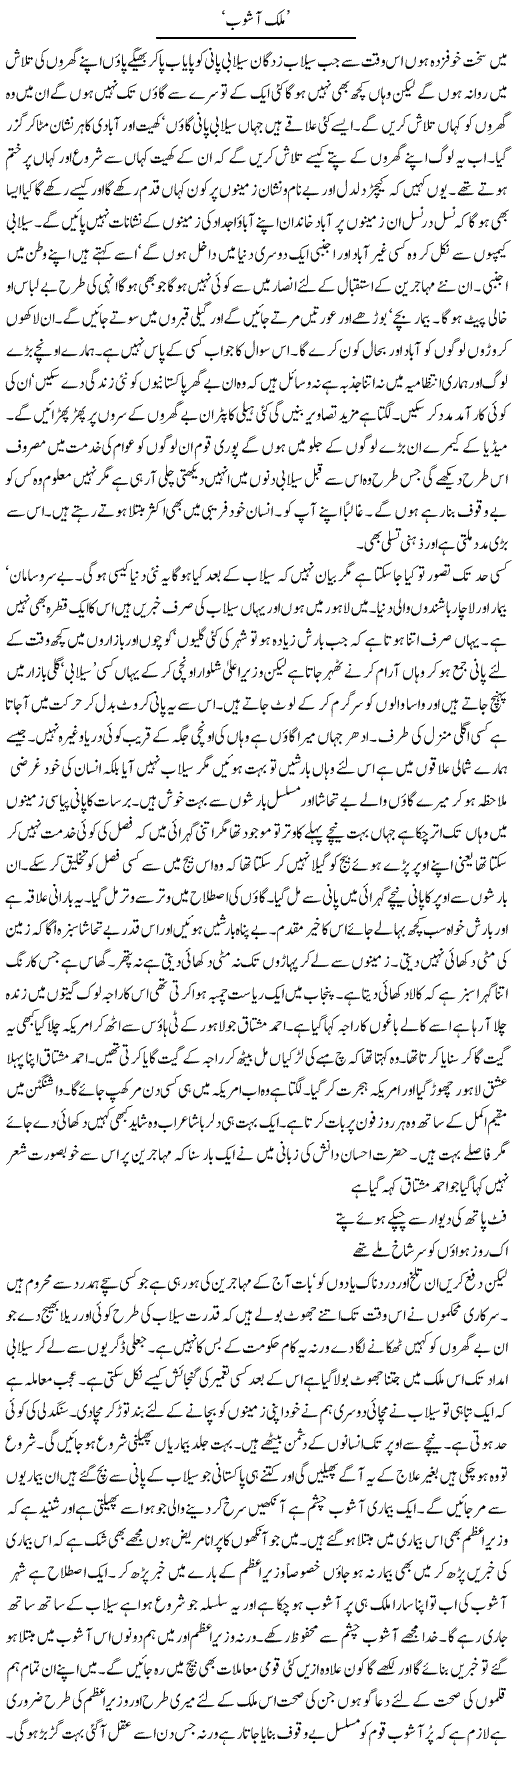 Country in Difficulty Express Column Abdul Qadir 16 September 2010